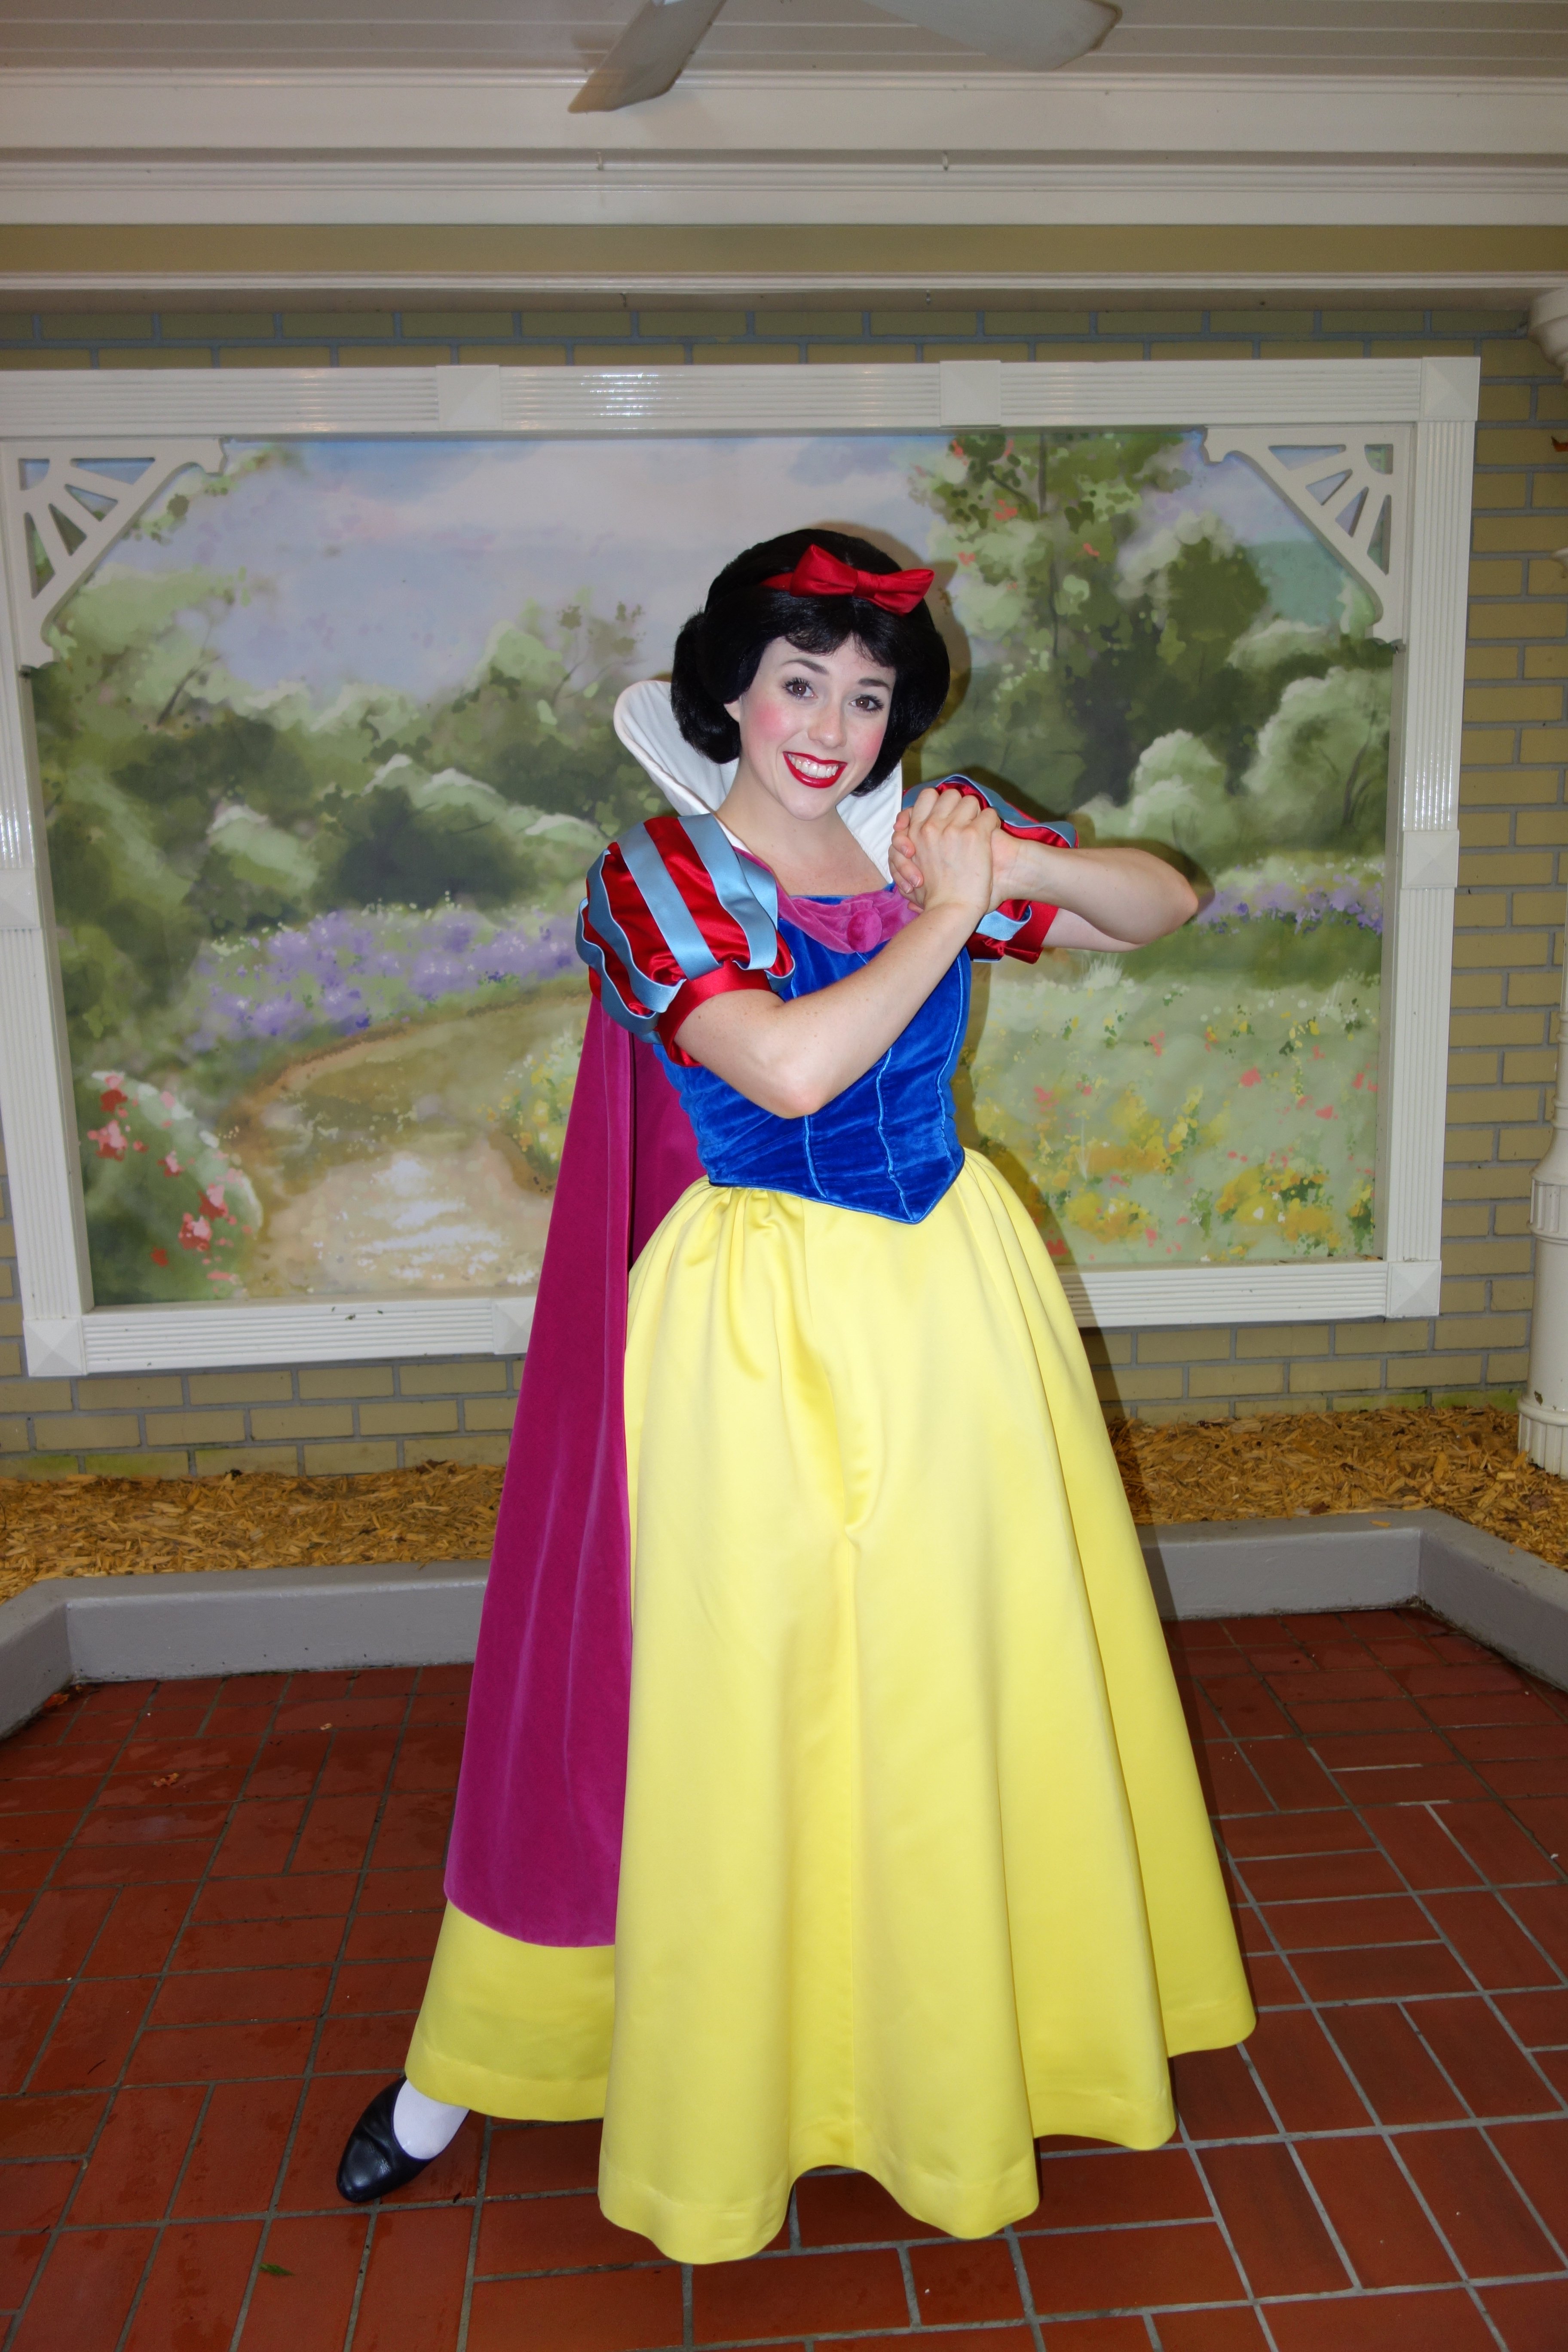 Snow White at the Magic Kingdom